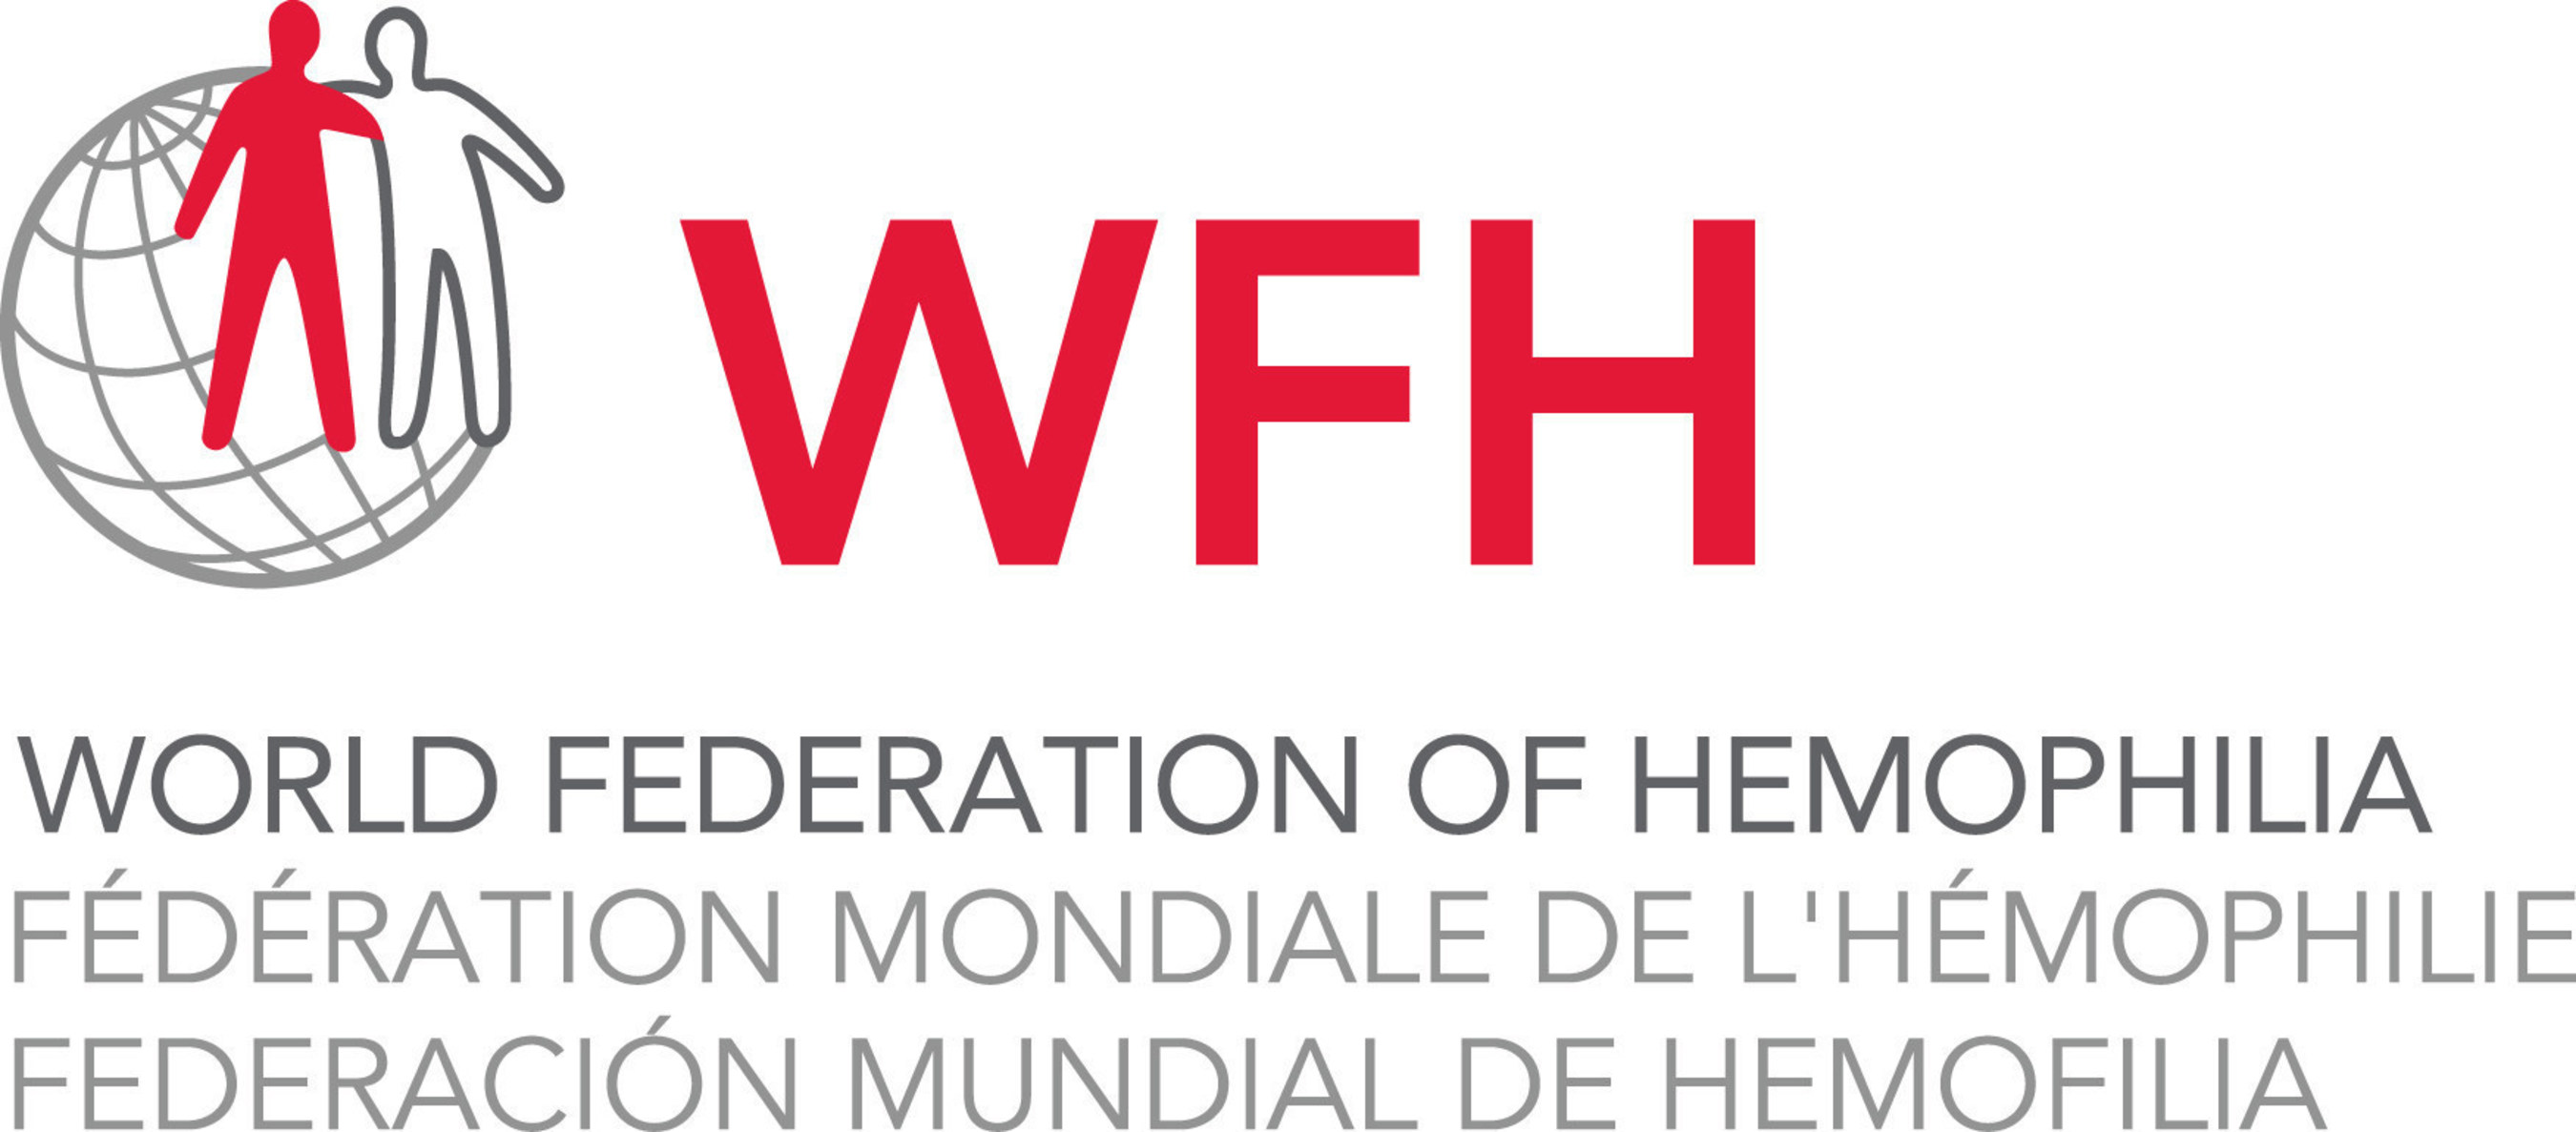 World Federation of Hemophilia Logo